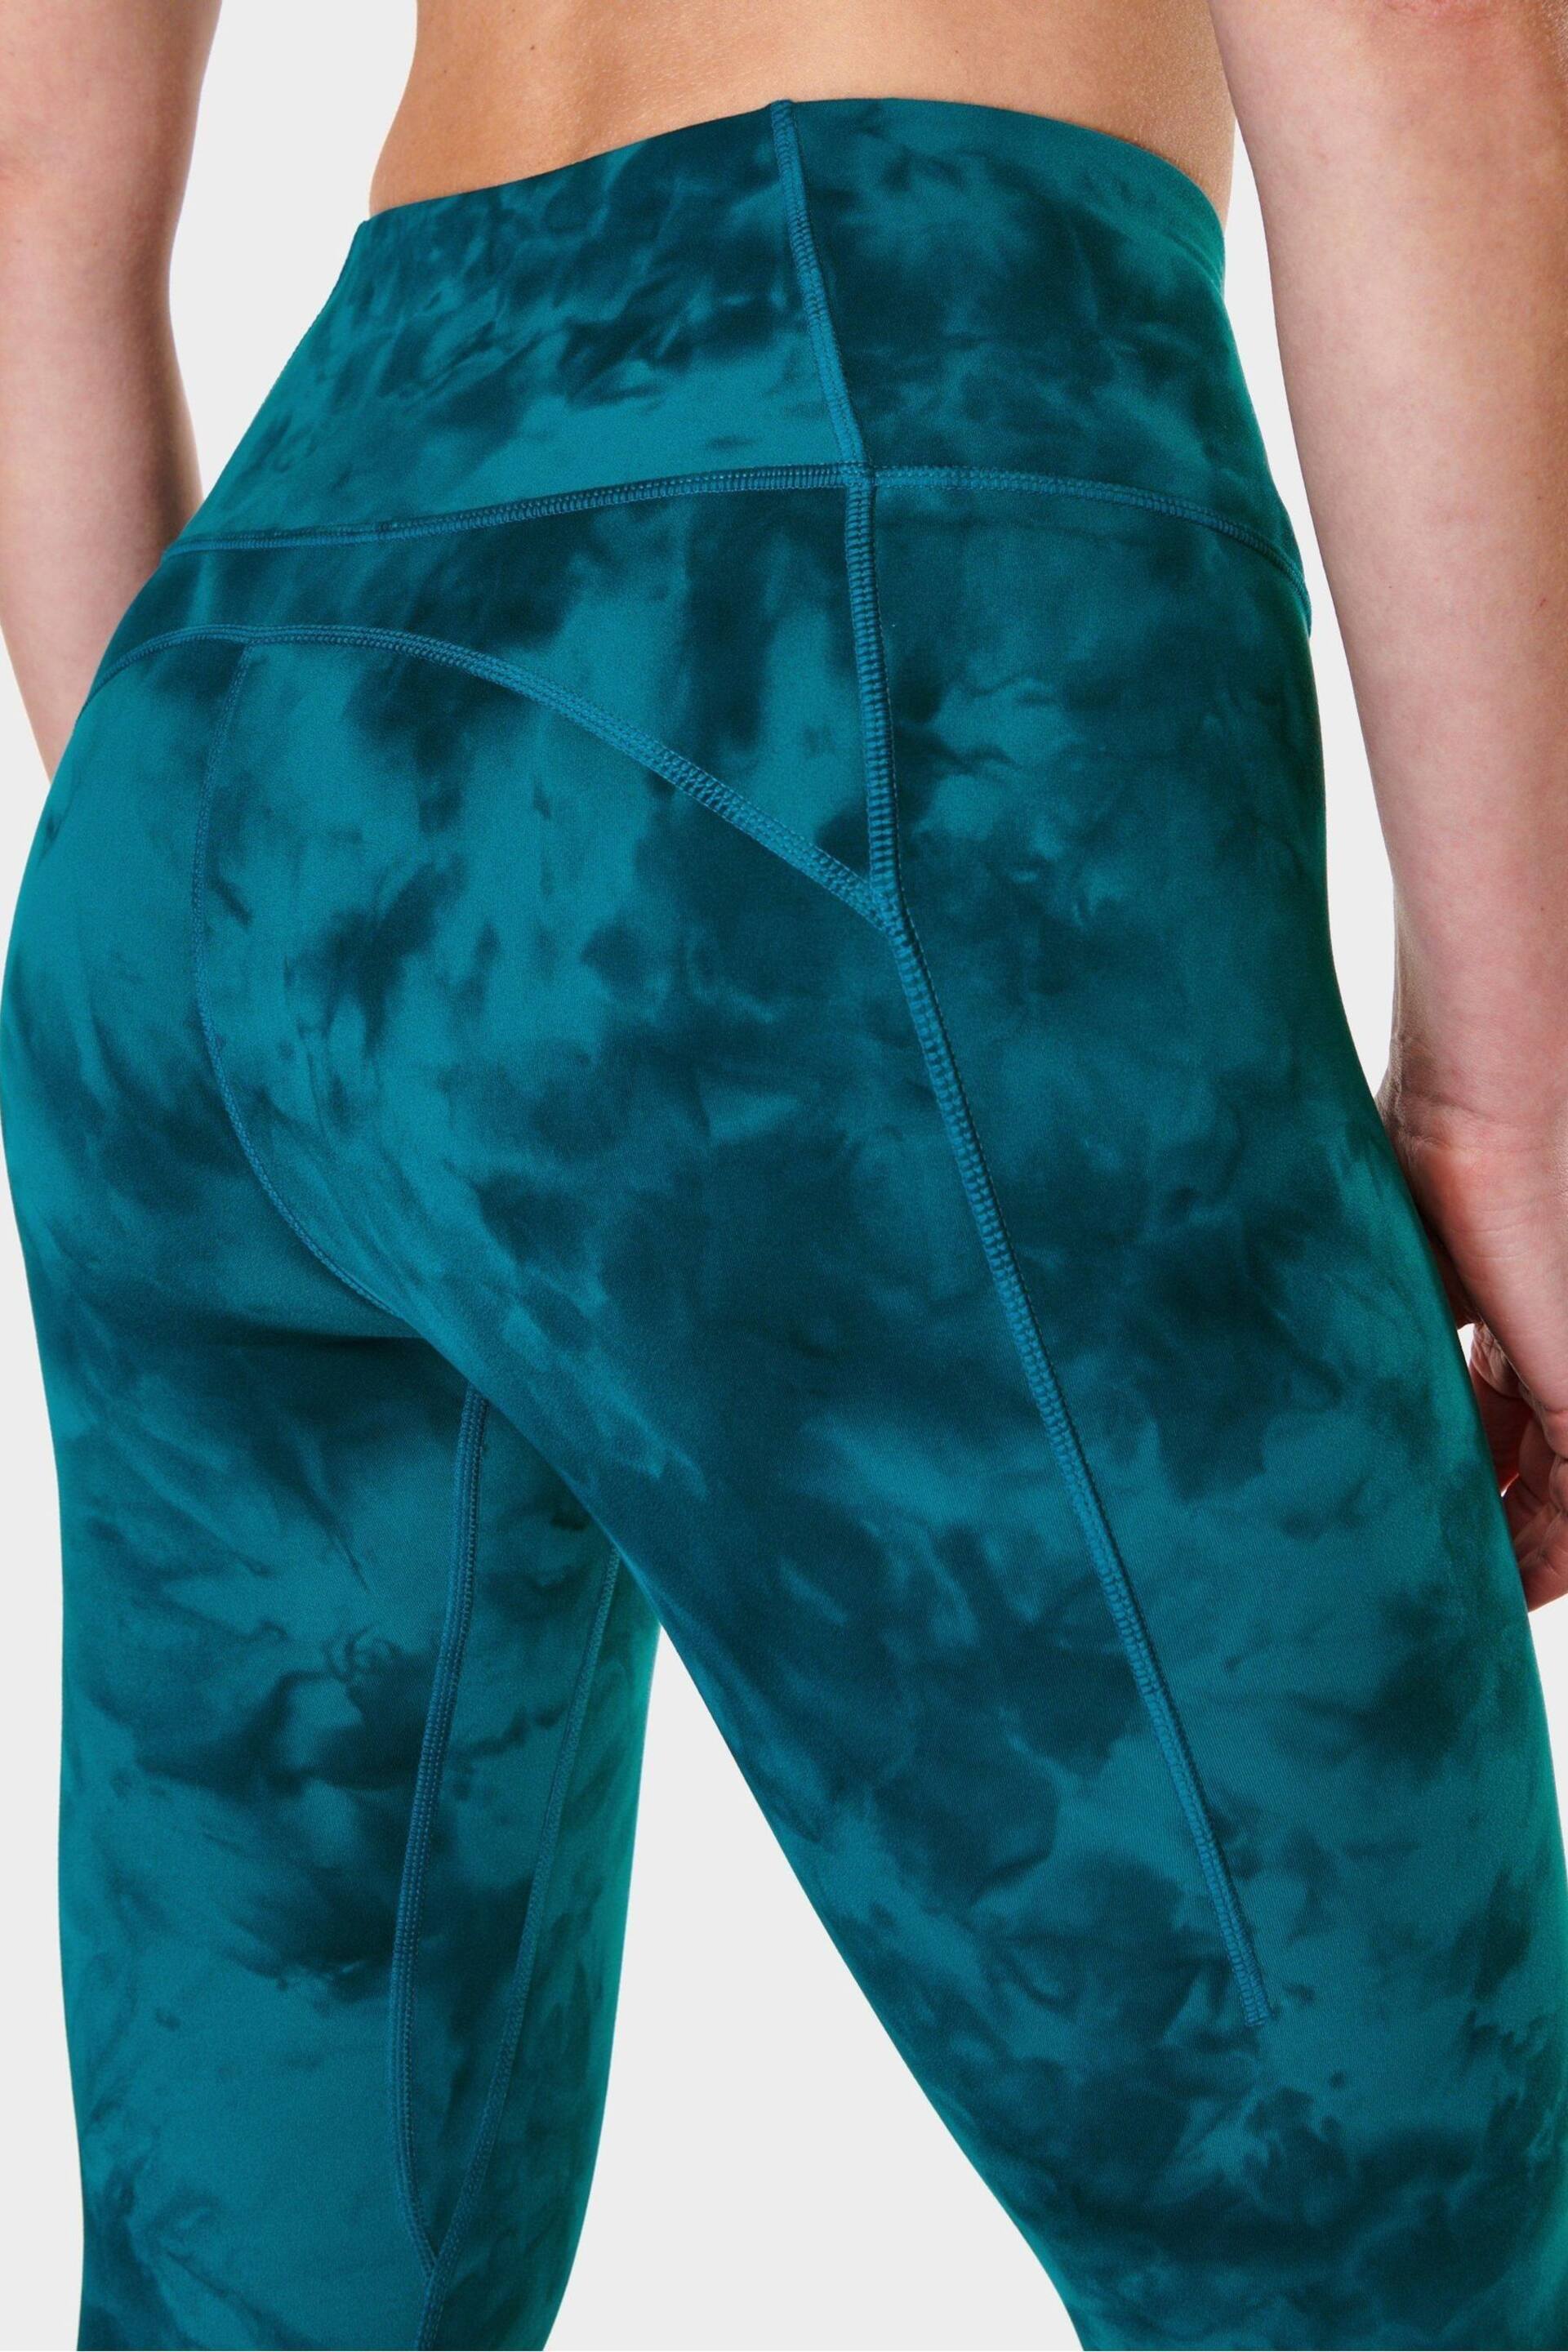 Sweaty Betty Reef Teal Blue Spray Dye 7/8 Length Super Soft Yoga Leggings - Image 8 of 8